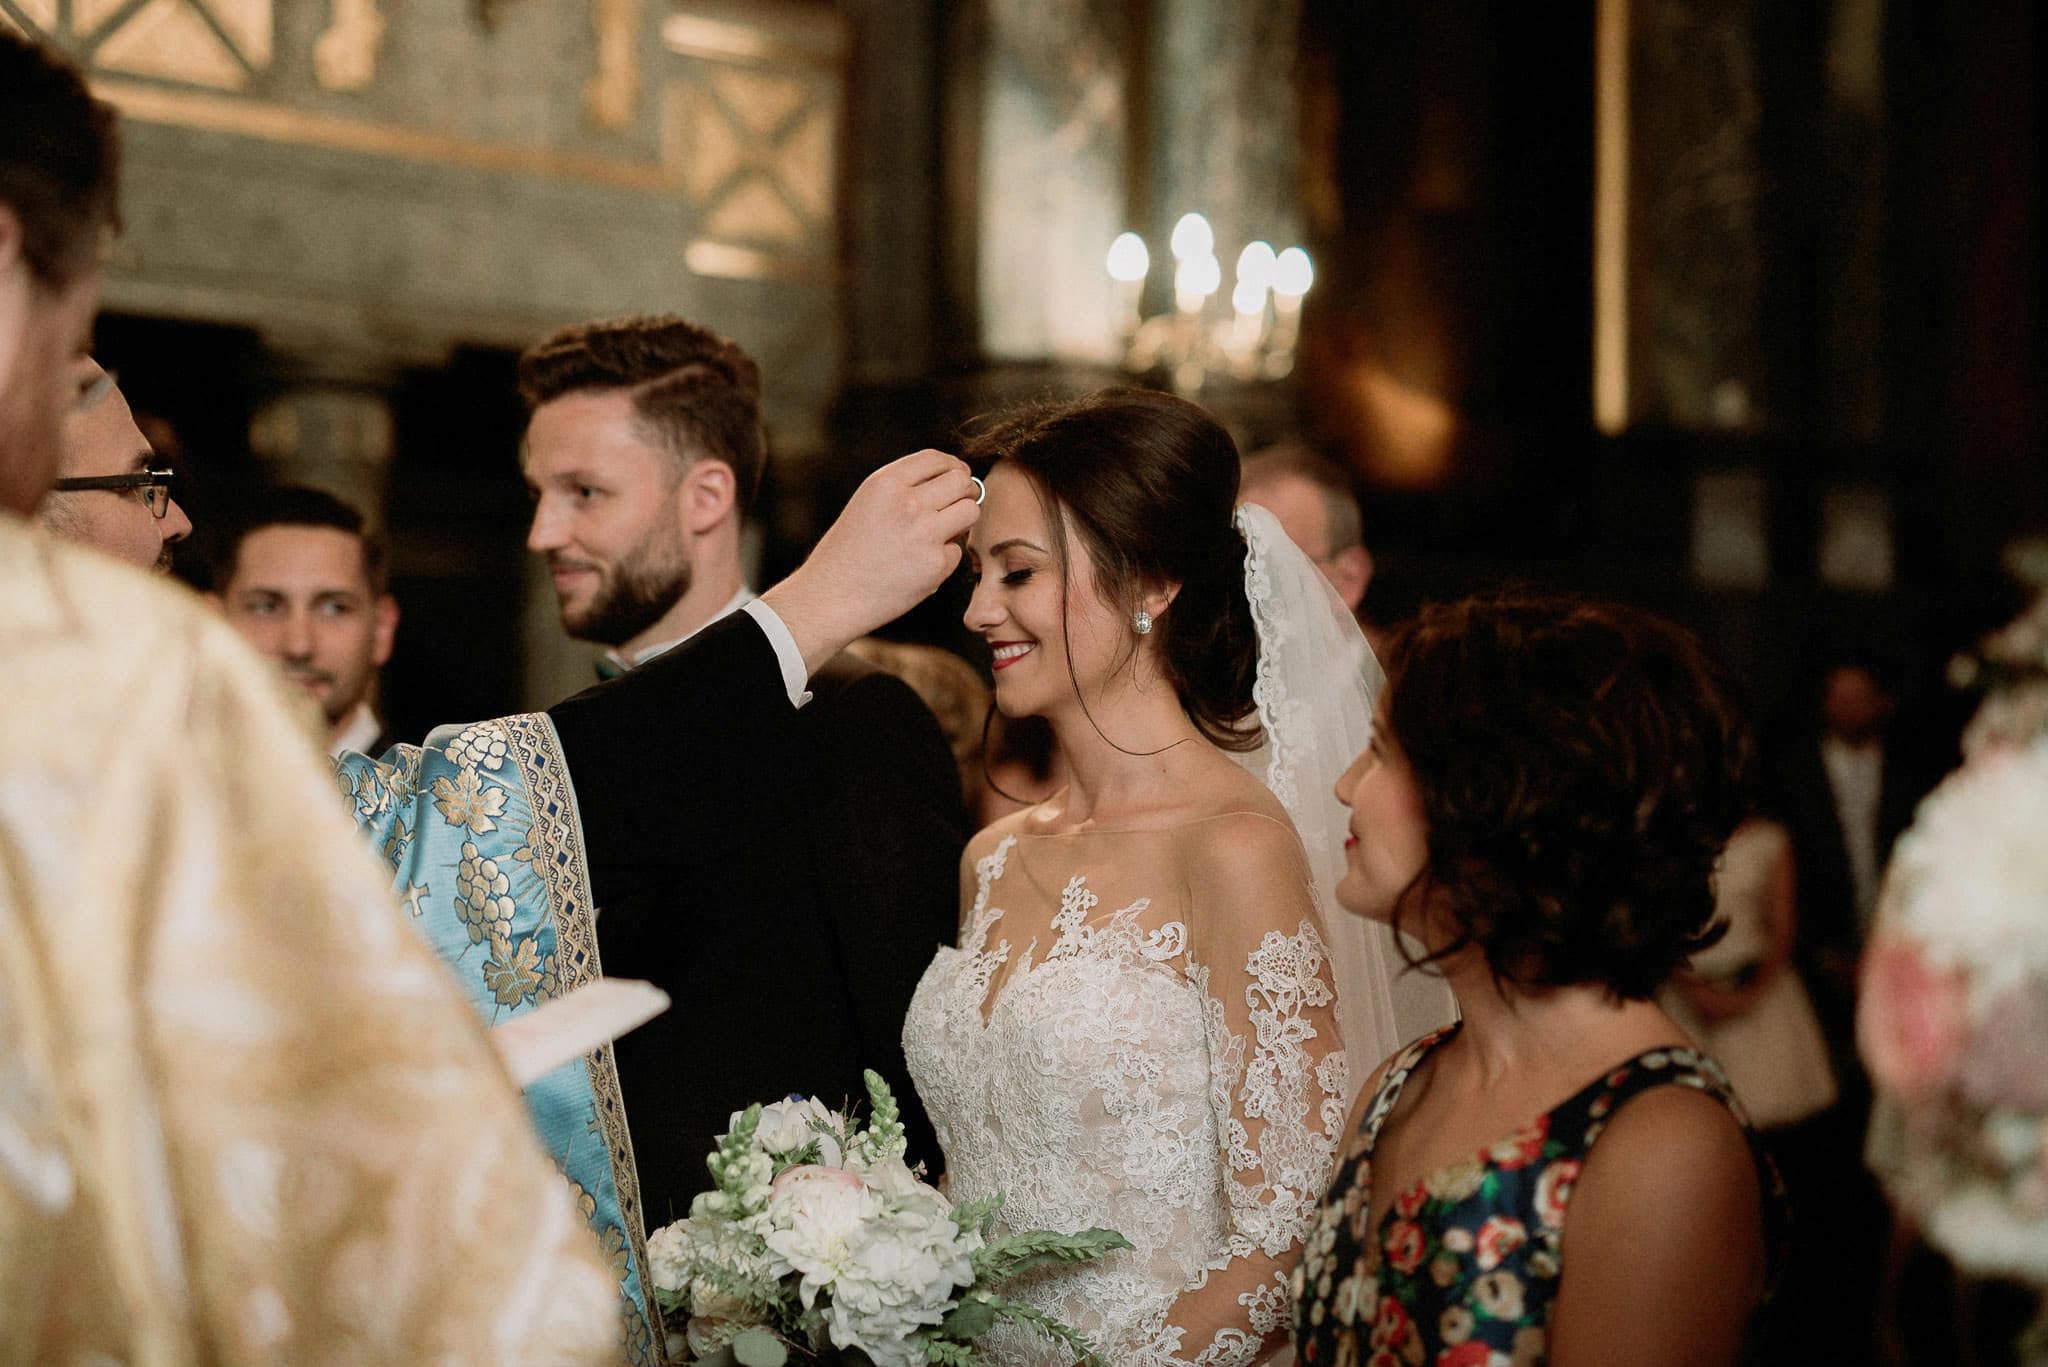 wedding rituals performed inside an orthodox church